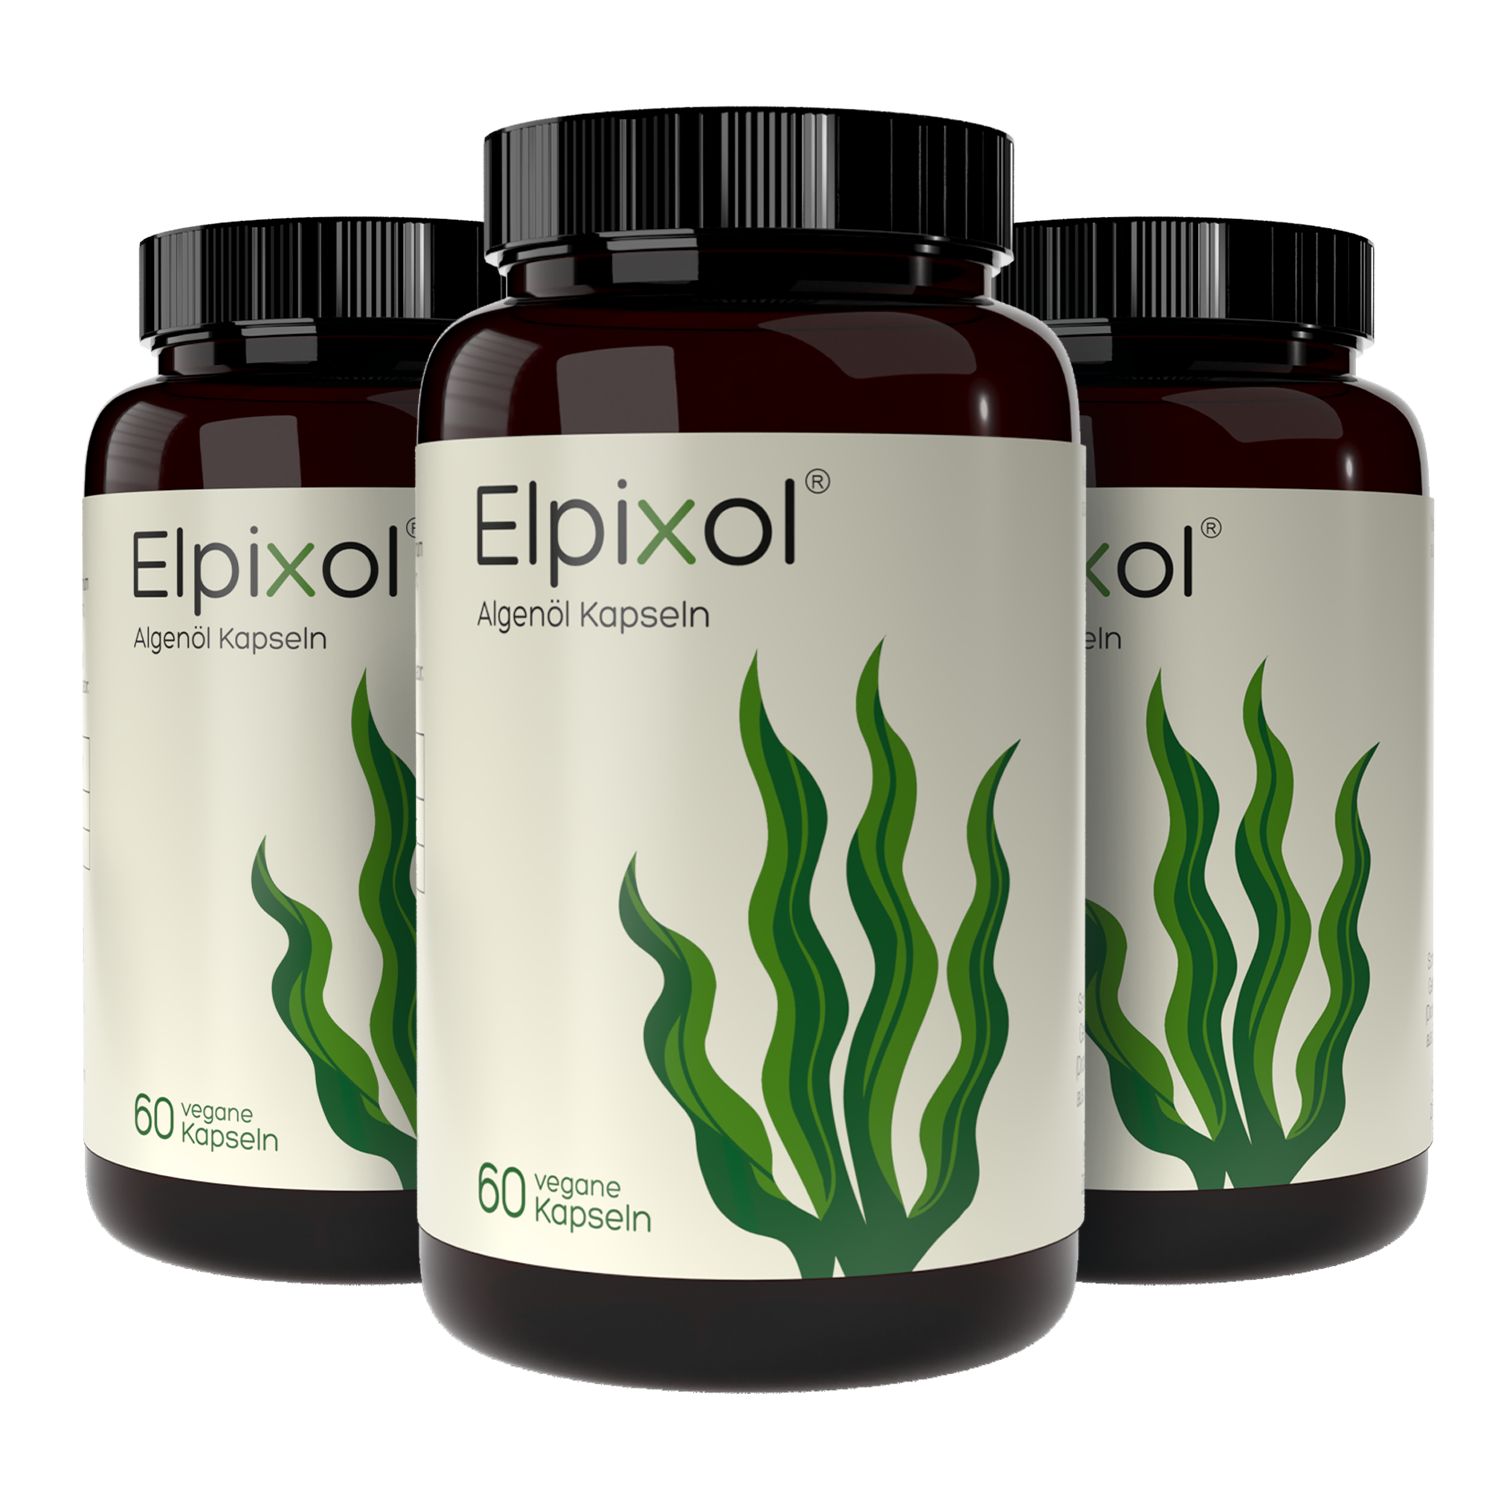 Elpixol® Algenöl 1000mg Kapseln mit Epa+Dha - Omega-3 - vegan